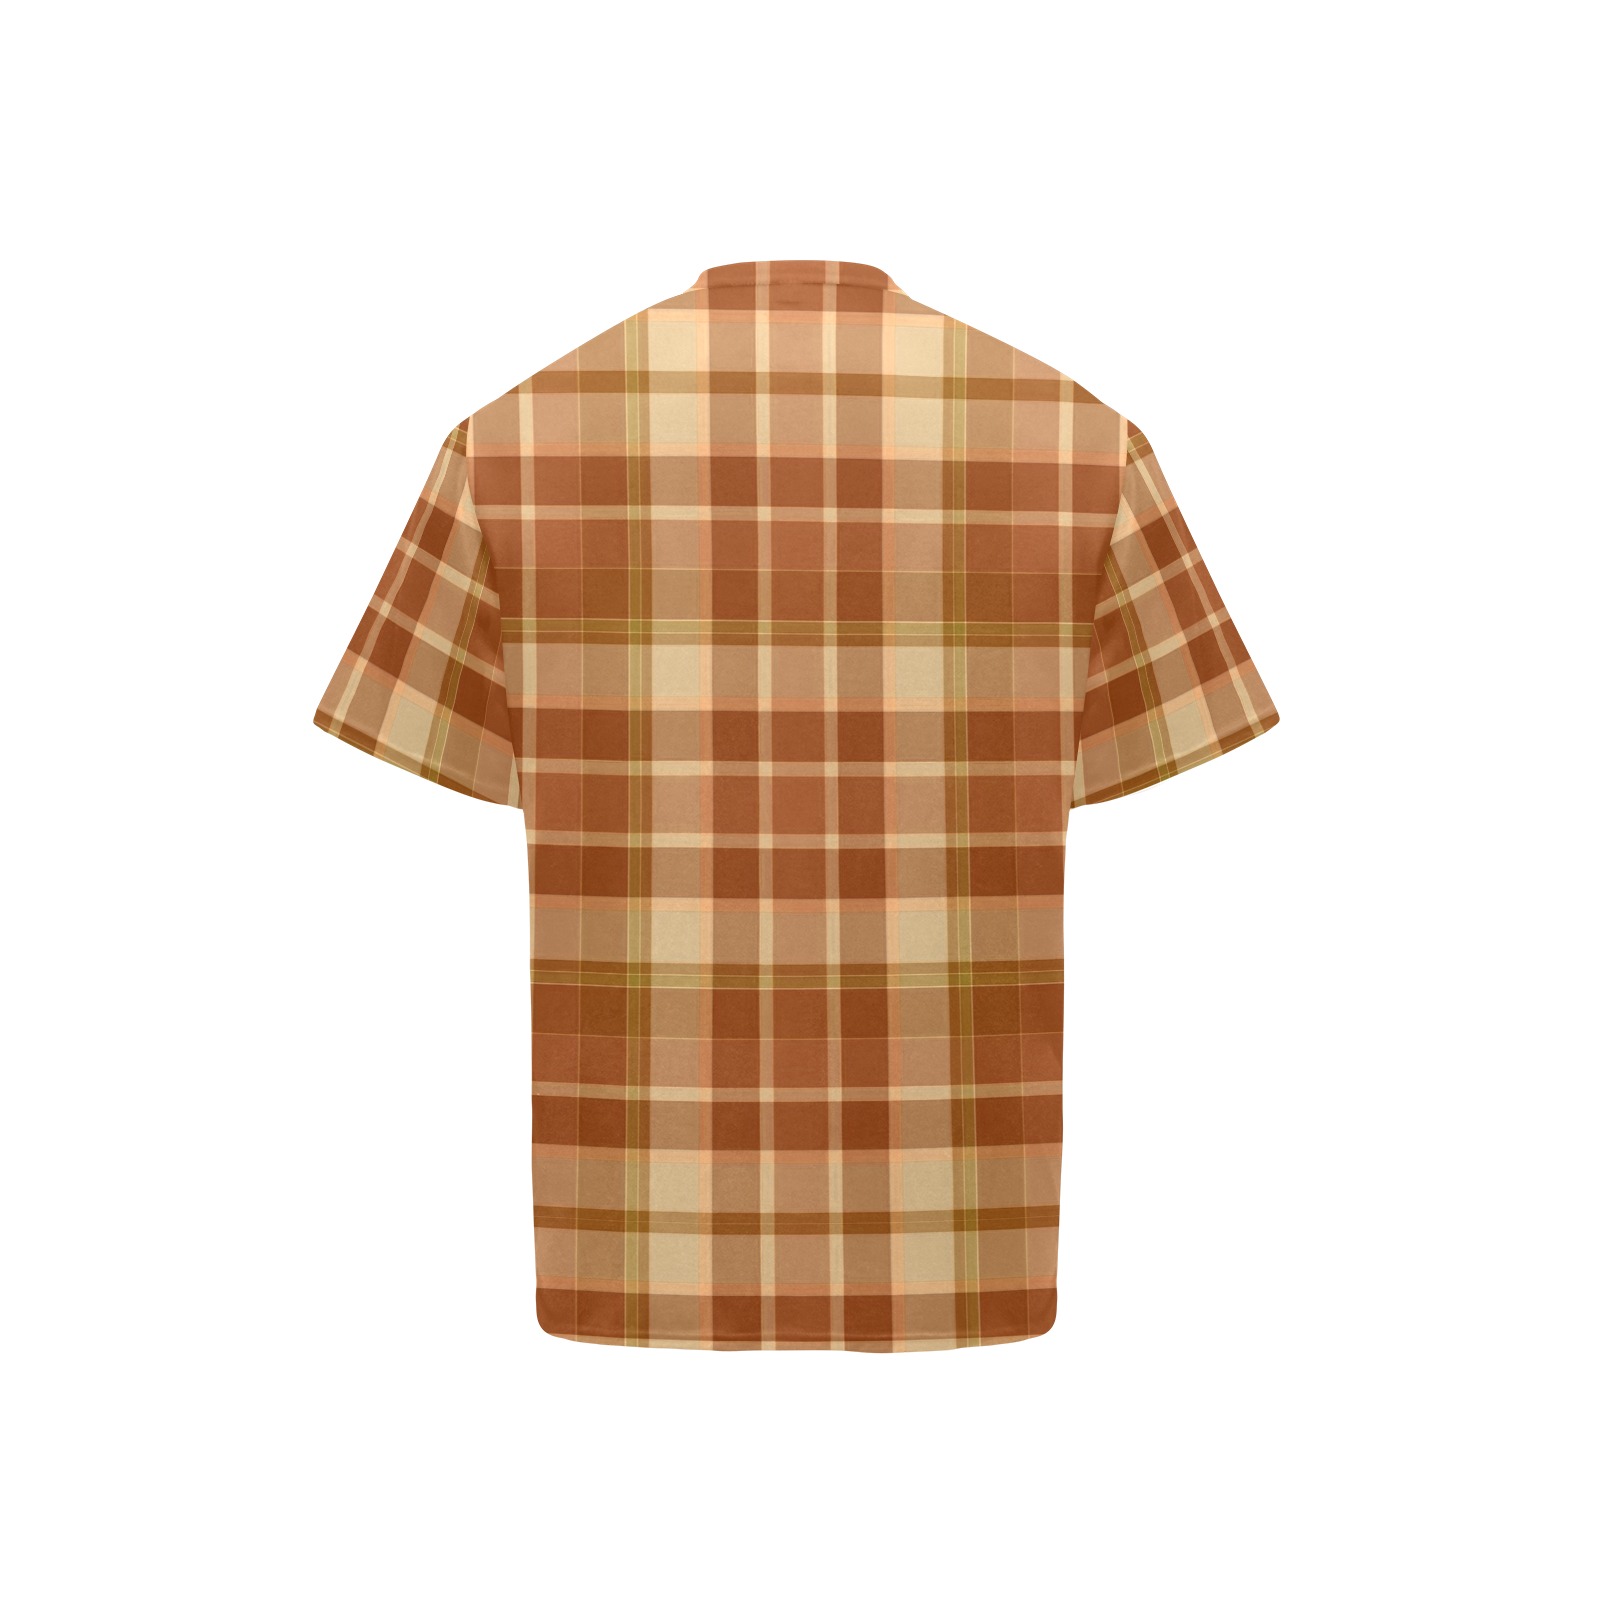 Shades Of Orange Plaid Men's Henley T-Shirt (Model T75)